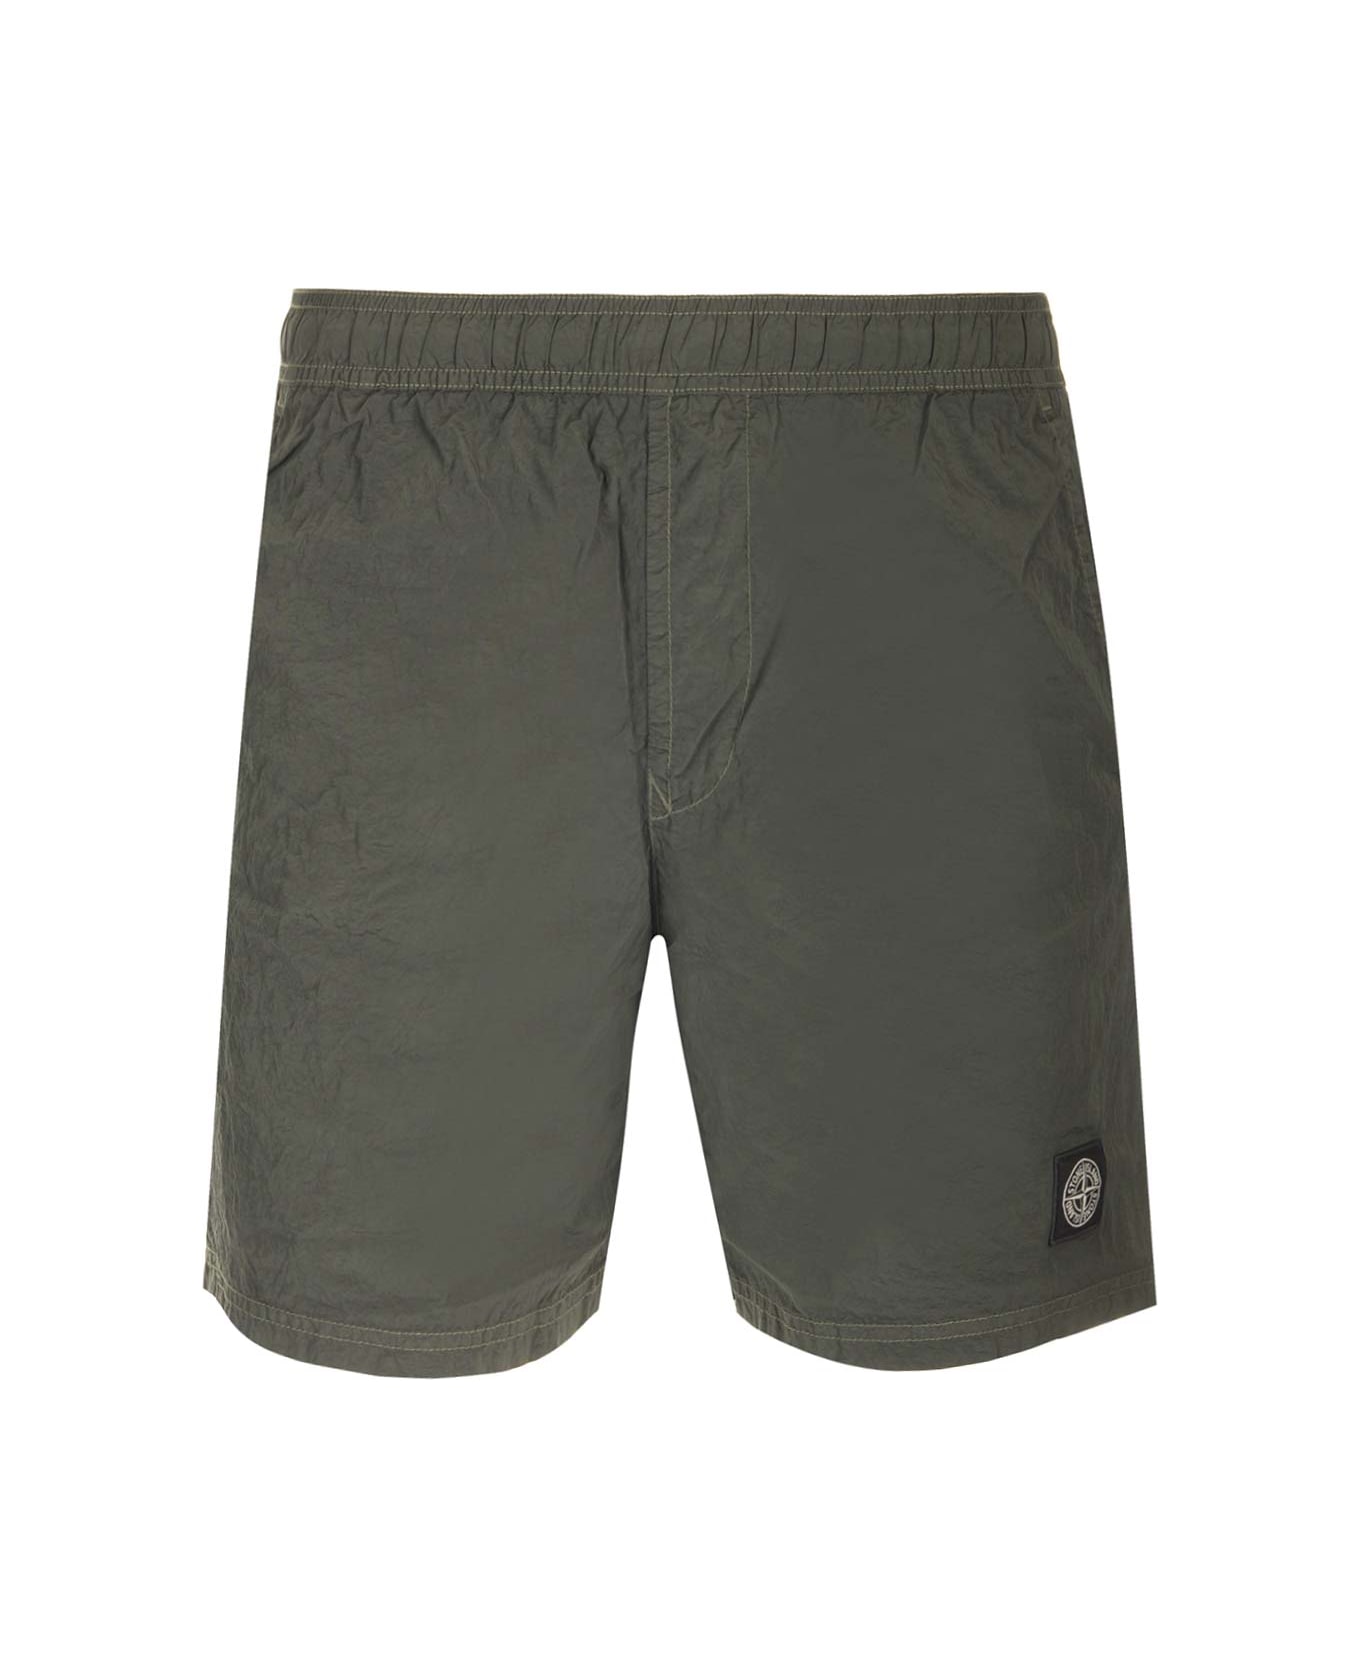 Stone Island Logo Patch Shorts - Green